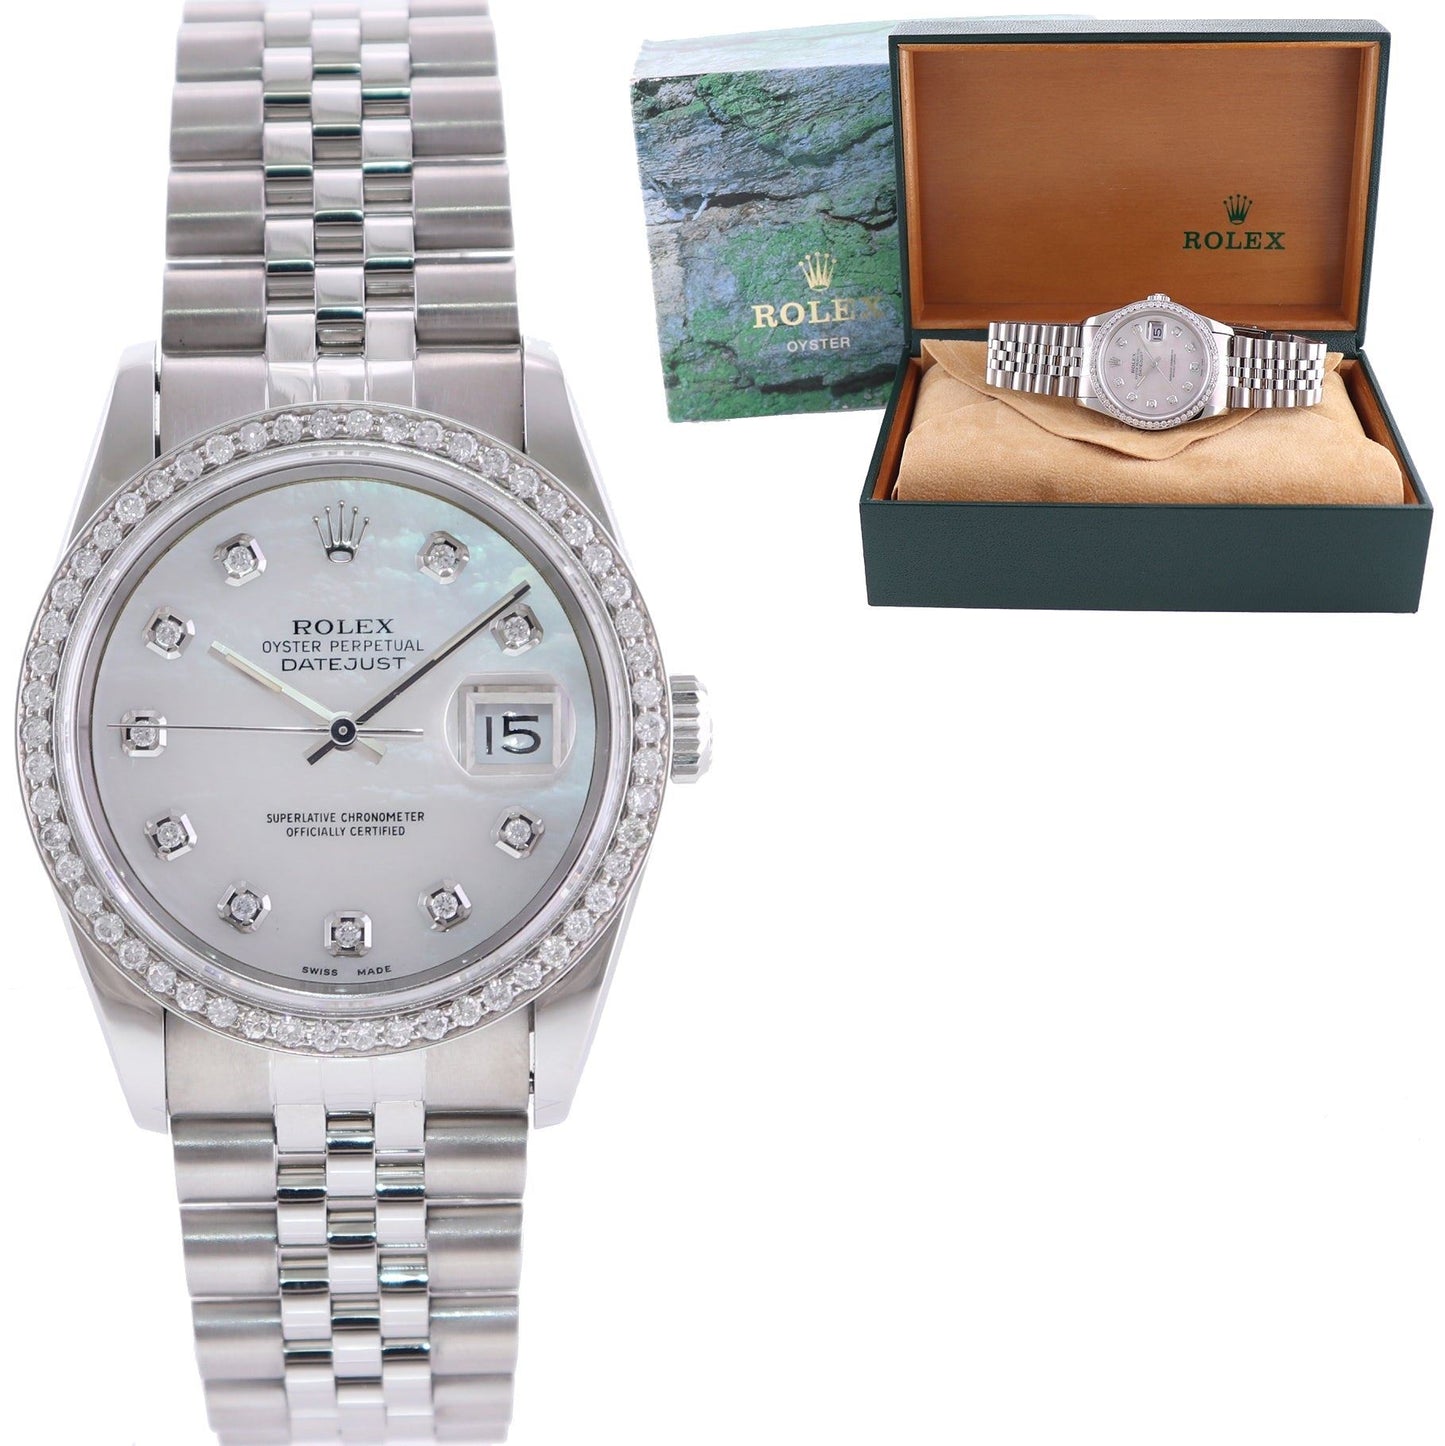 DIAMOND Bezel Rolex DateJust 36mm MOP Dial 16220 Steel White Gold Date Watch